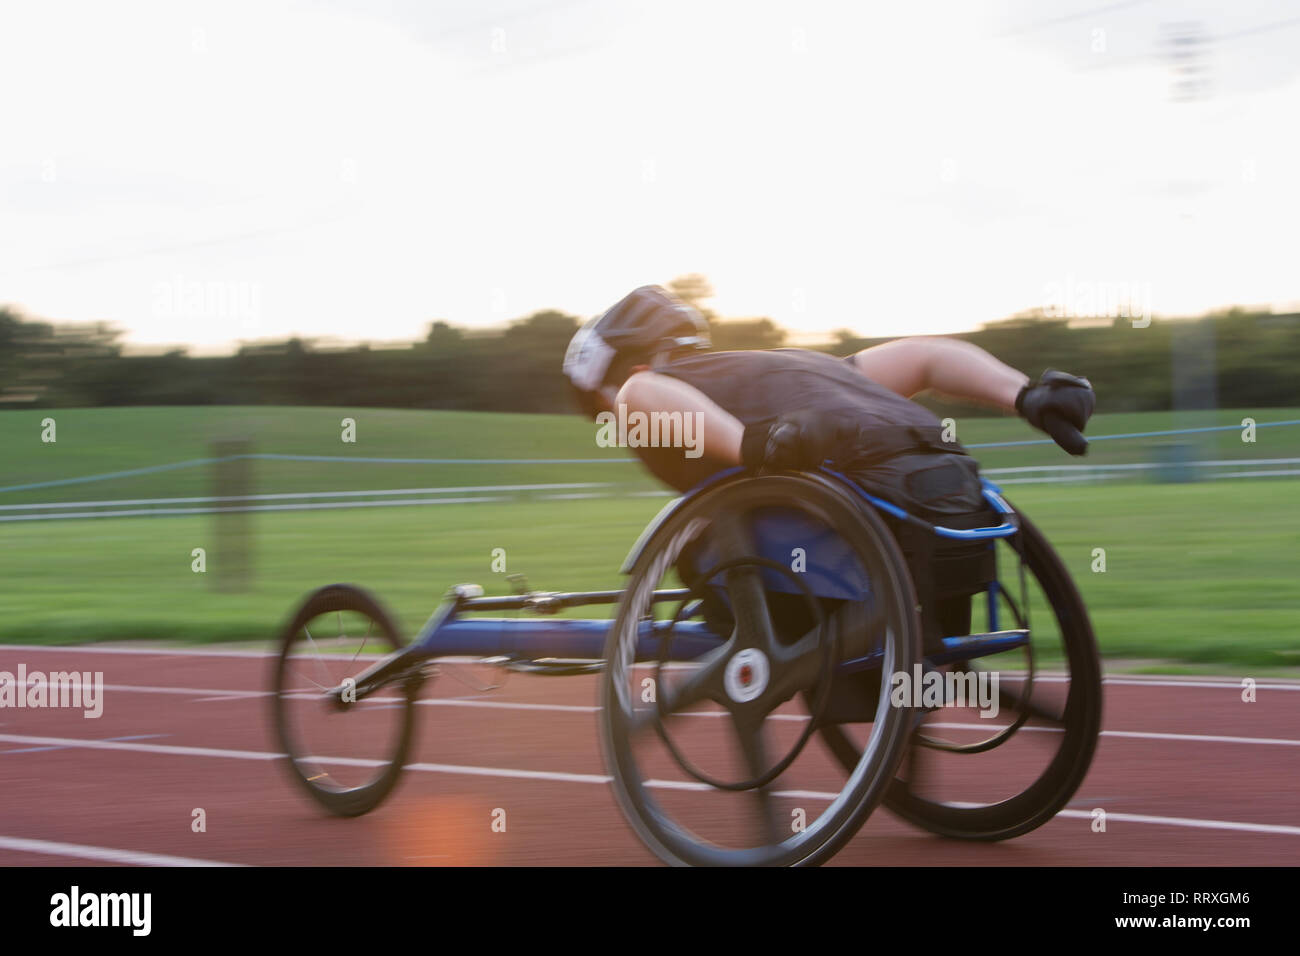 Paraplegic athlete speeding along sports track in wheelchair race Stock Photo